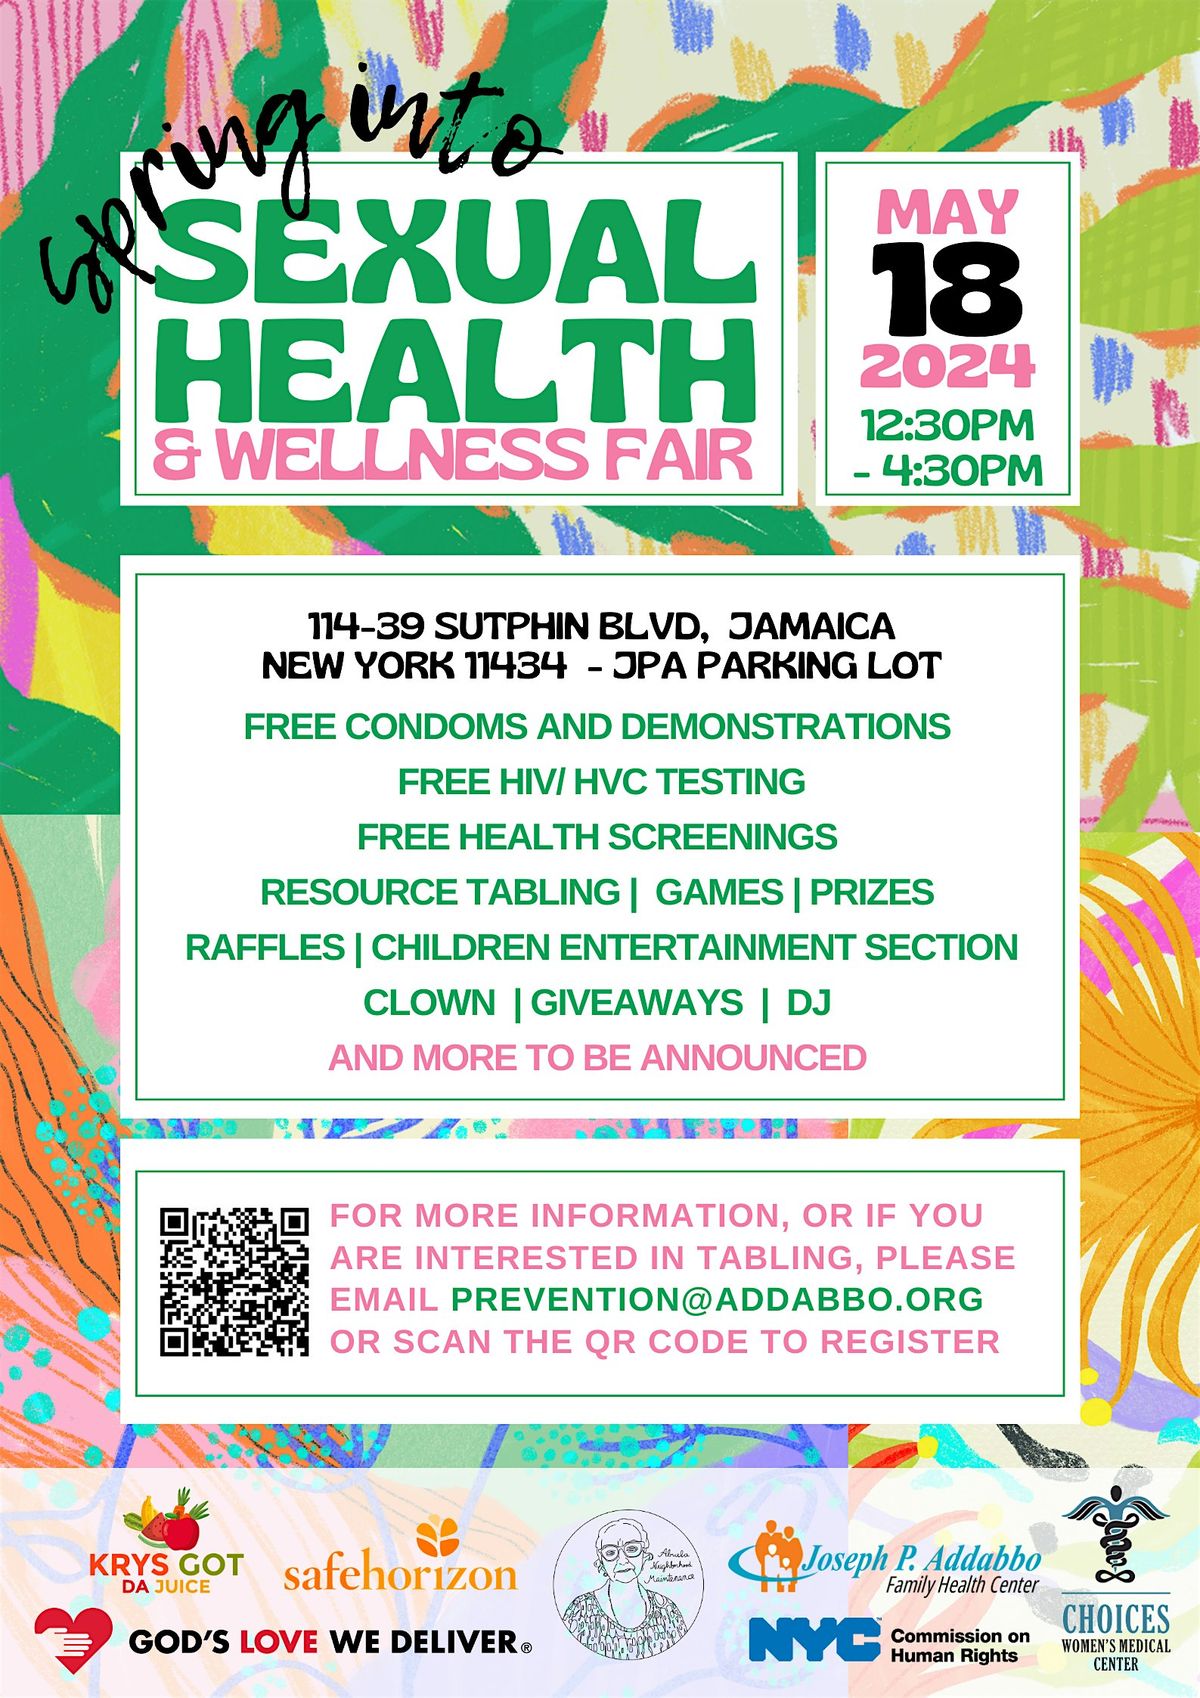 Spring Into Sexual Health & Wellness Fair!